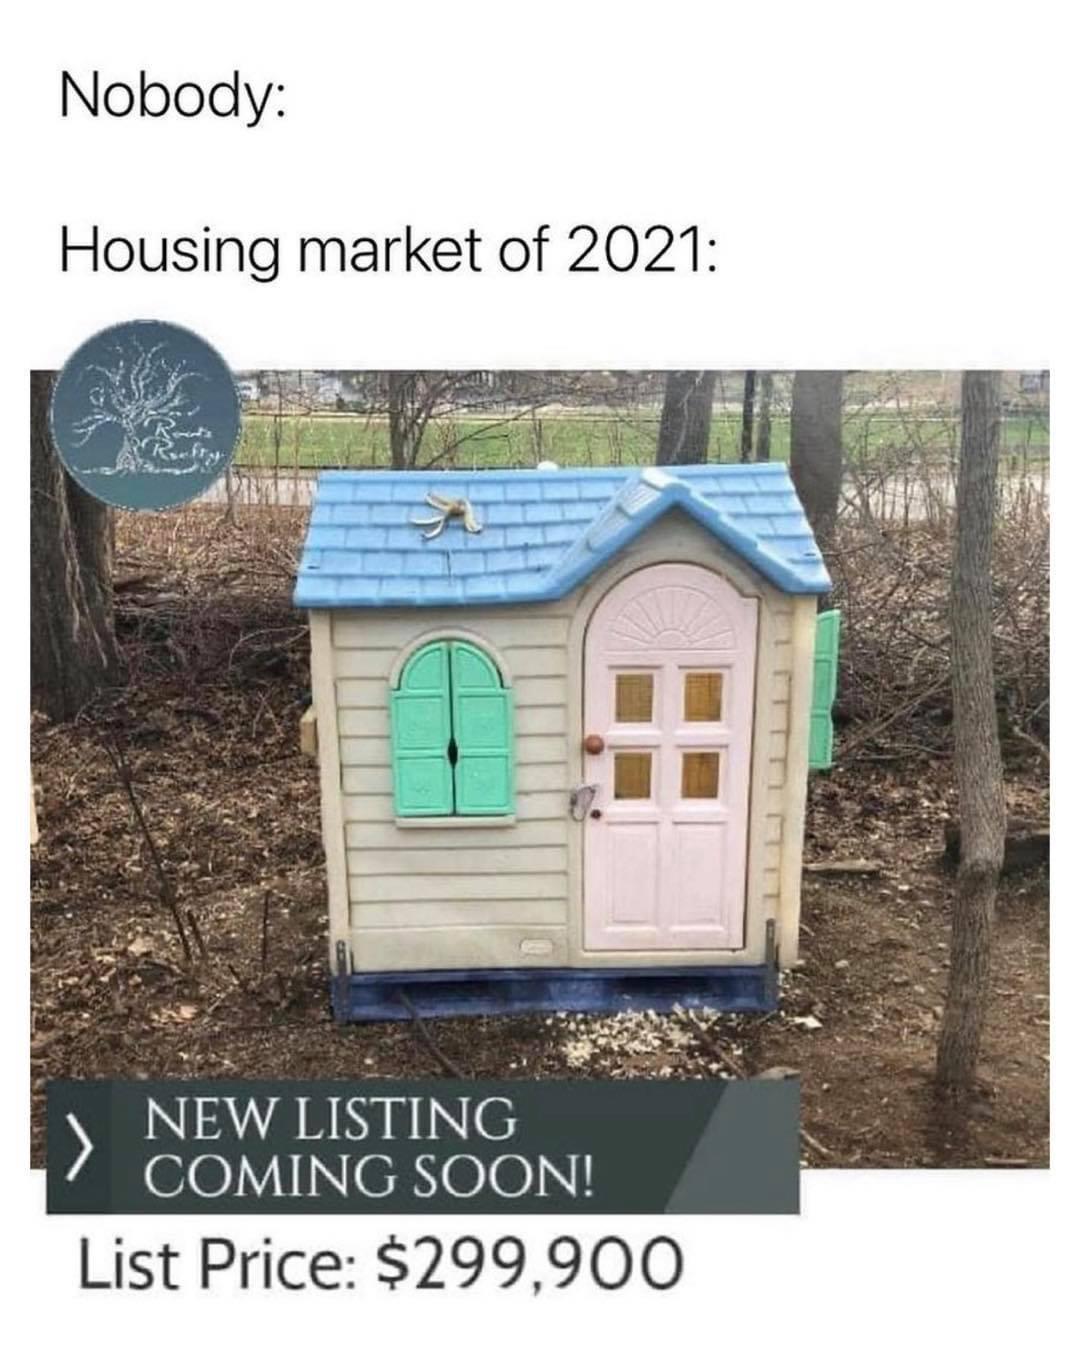 houses in 2021 meme - Nobody Housing market of 2021 Ele New Listing Coming Soon! List Price $299,900